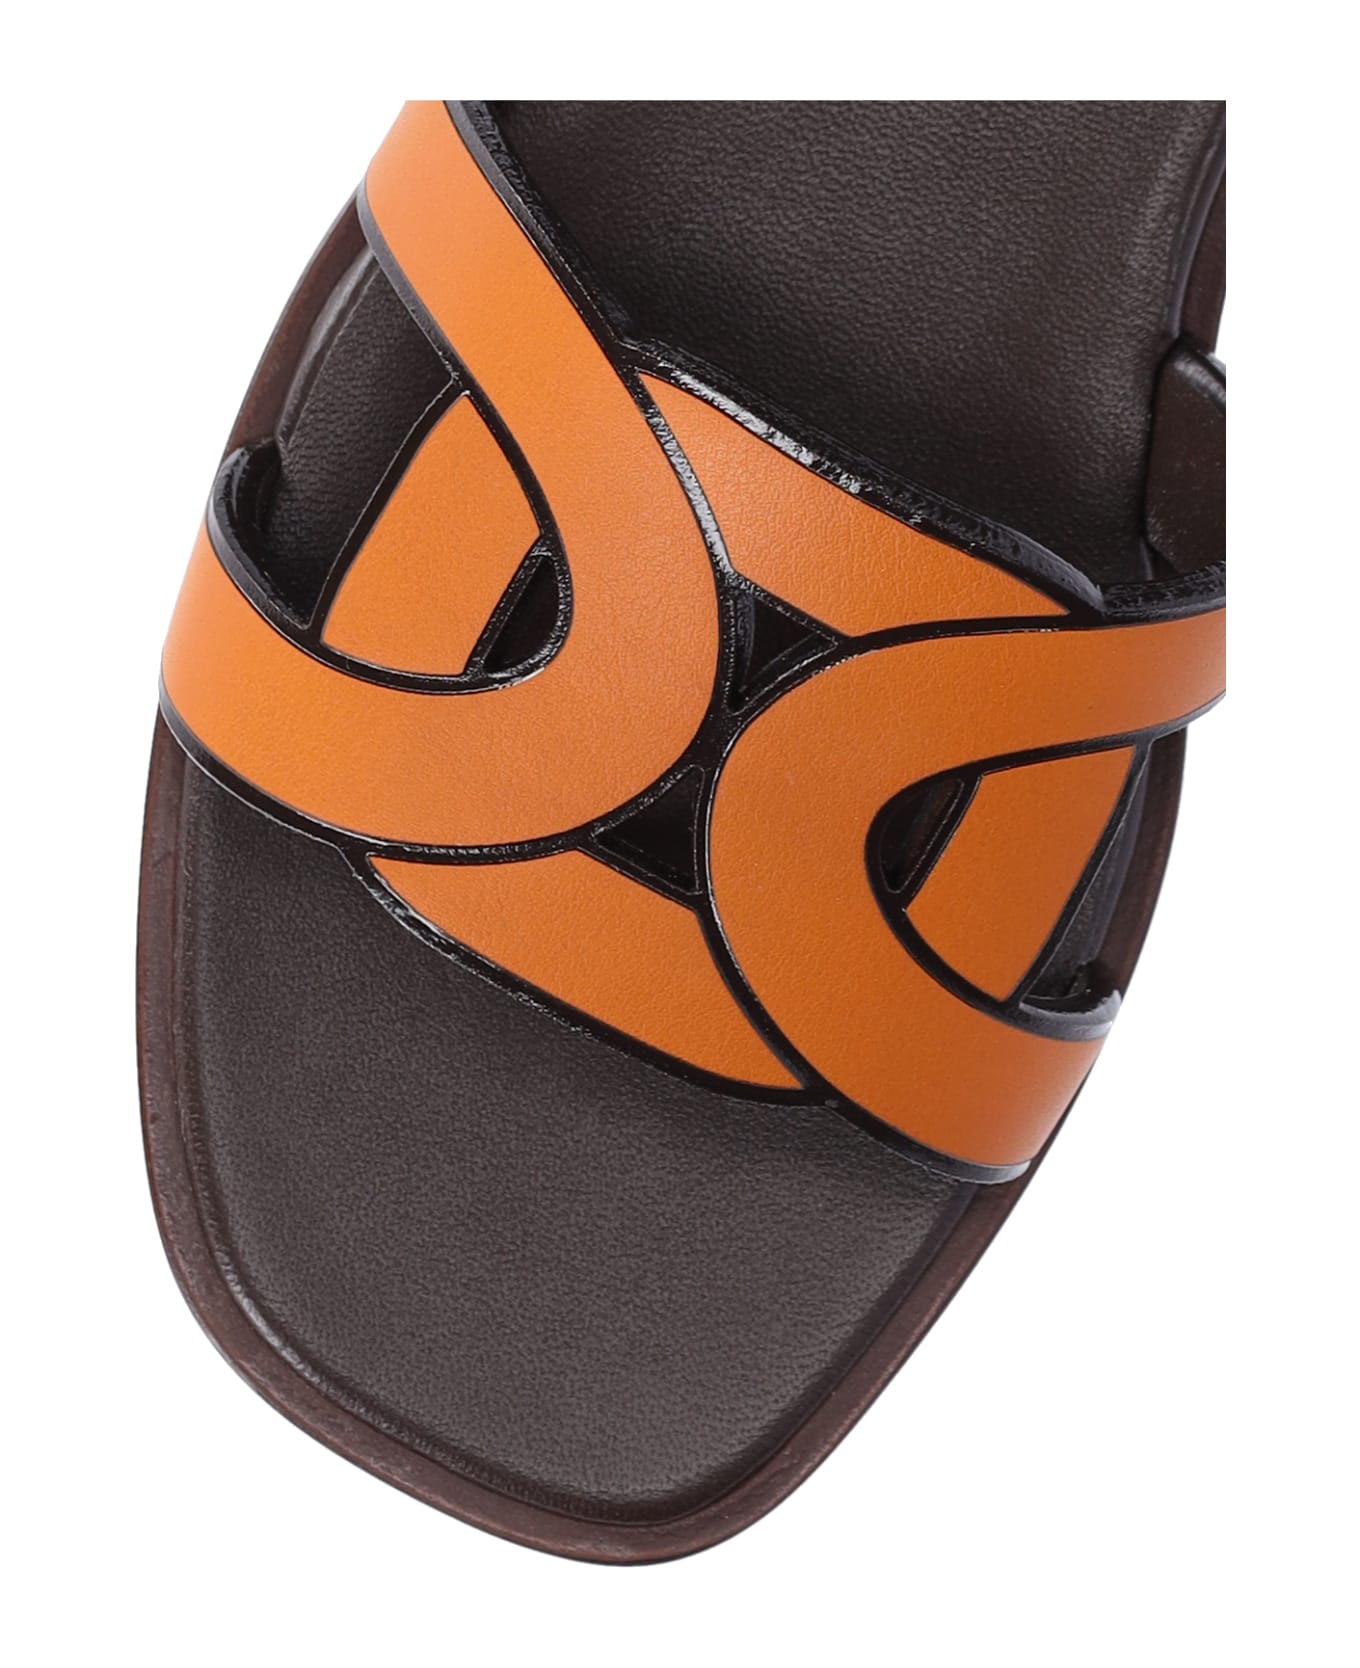 Tod's Shaped Sandals - Orange